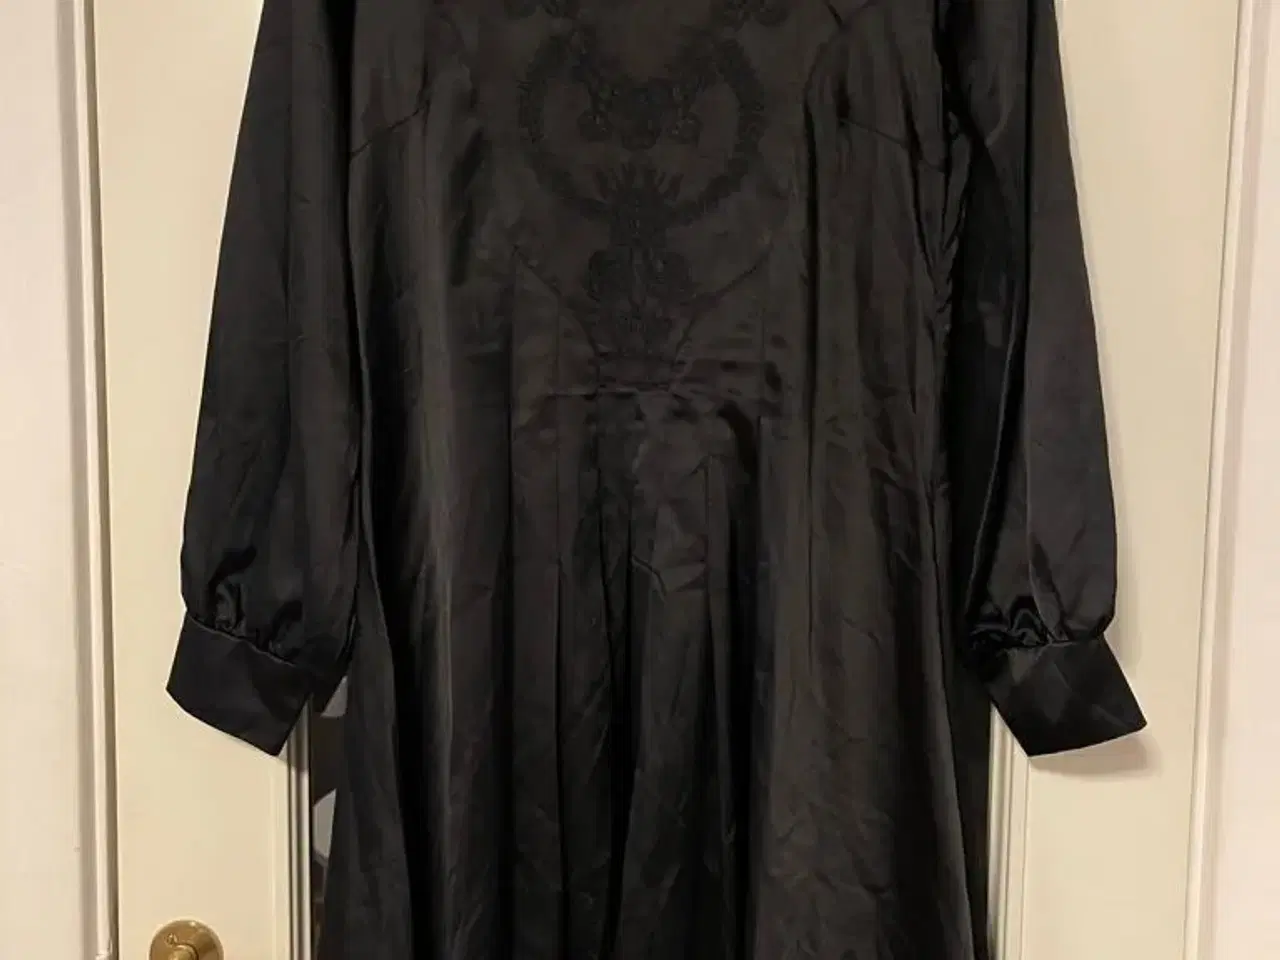 Billede 1 - Ny flot sort kjole i flere størrelser 